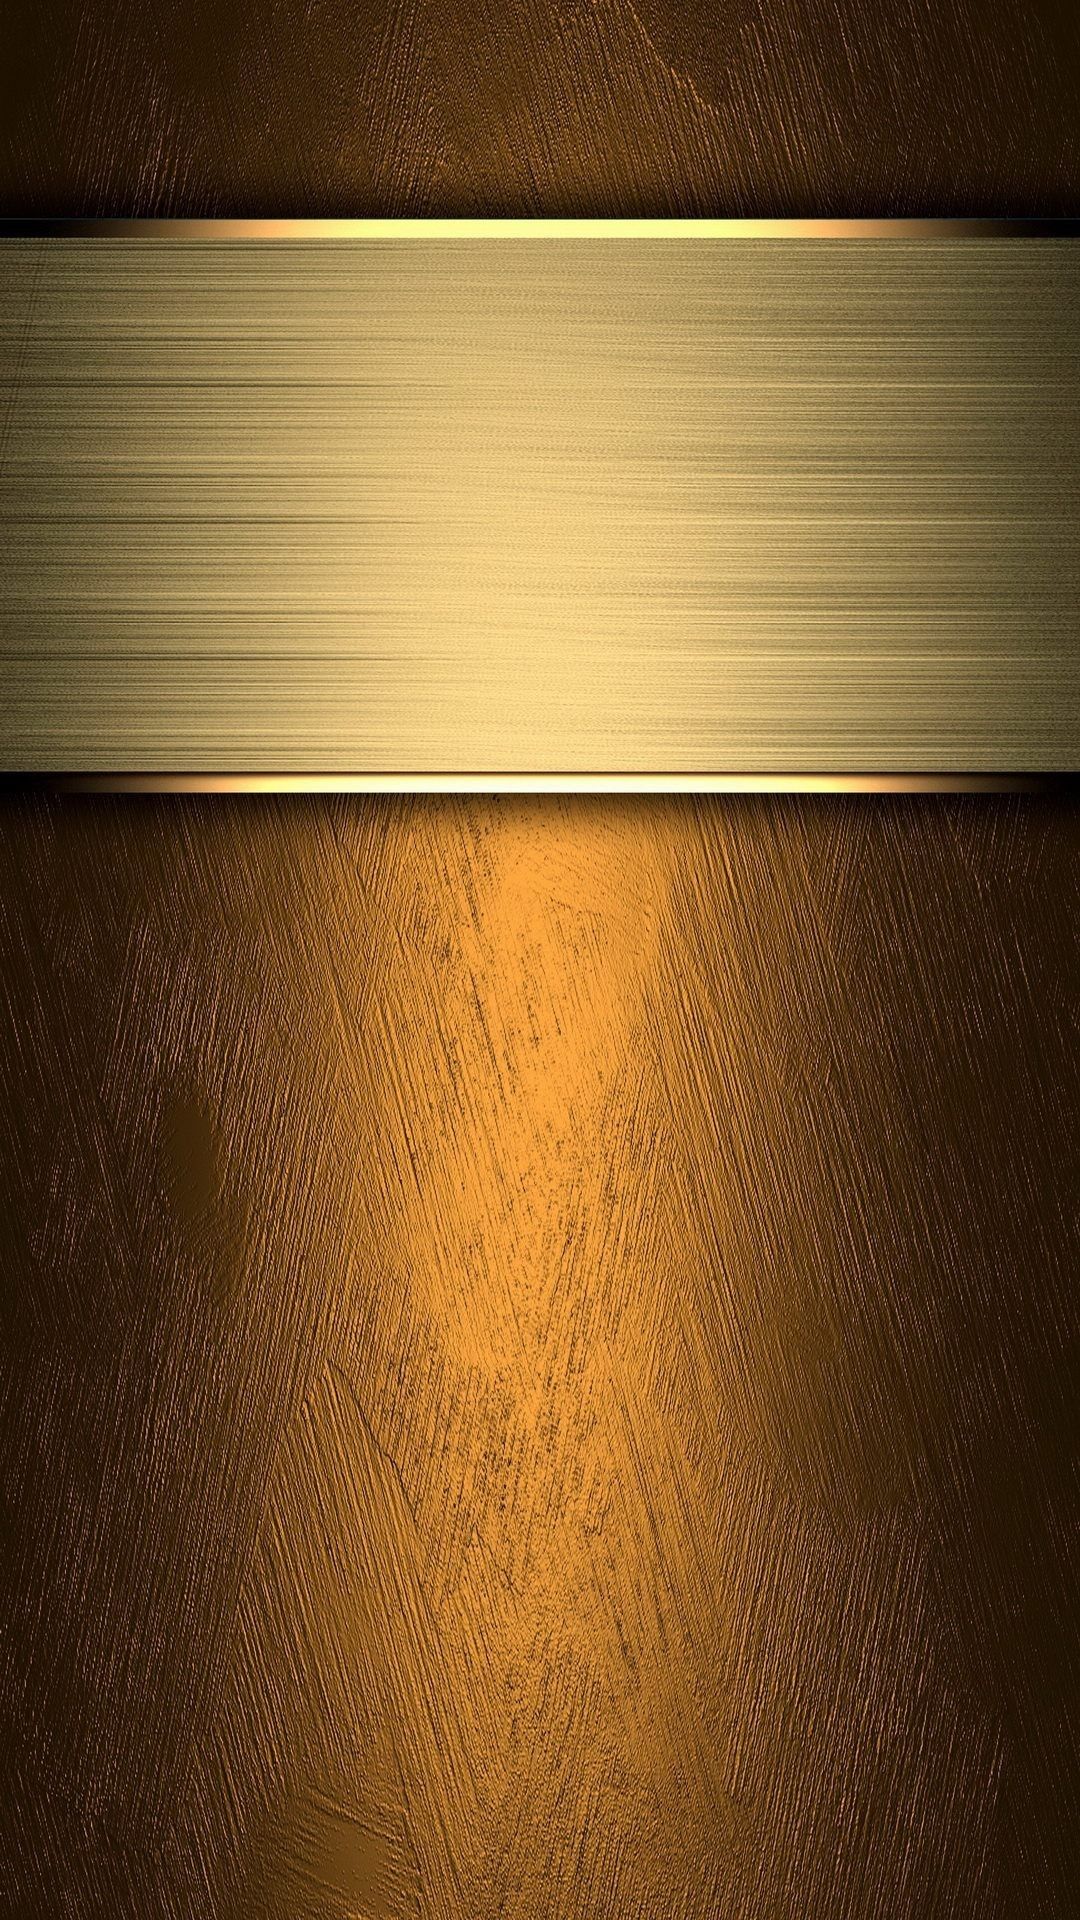 Metallic Golden Brown Android Wallpapers - Wallpaper Cave